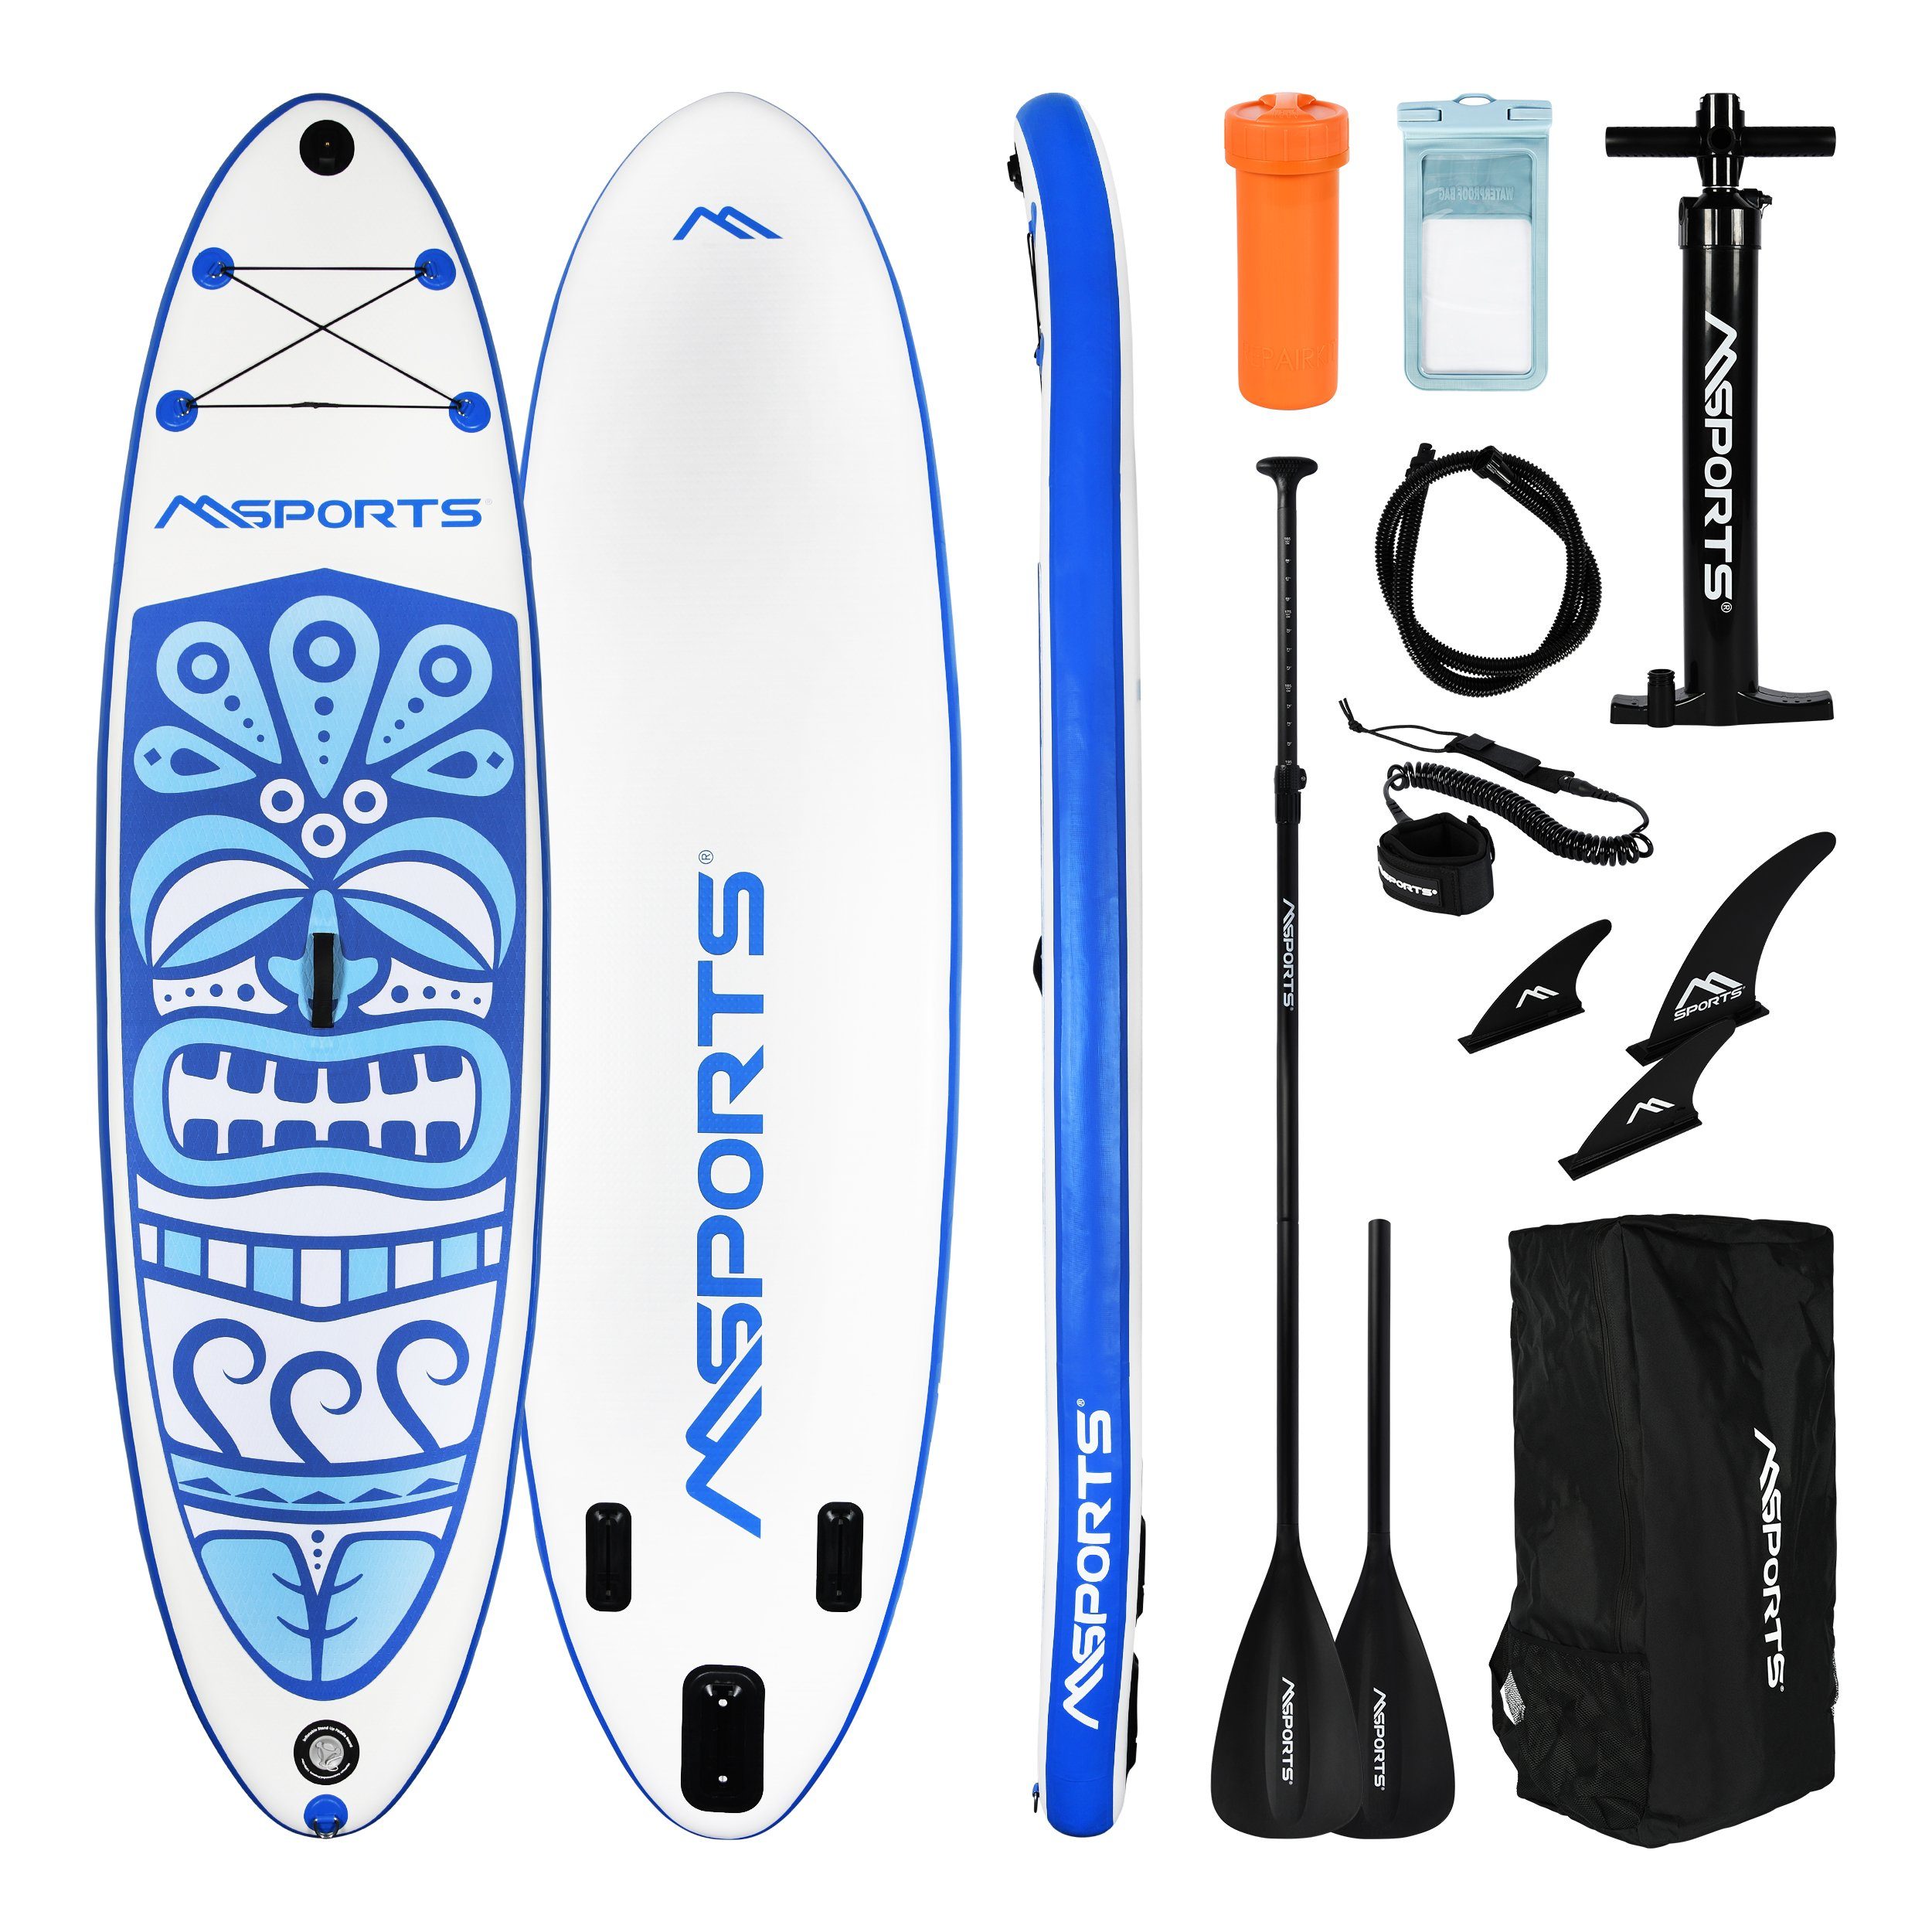 MSports® Inflatable SUP-Board Stand Up Paddle Board Aufblasbar Komplettes Paddleboard inkl. Zubehör Blau